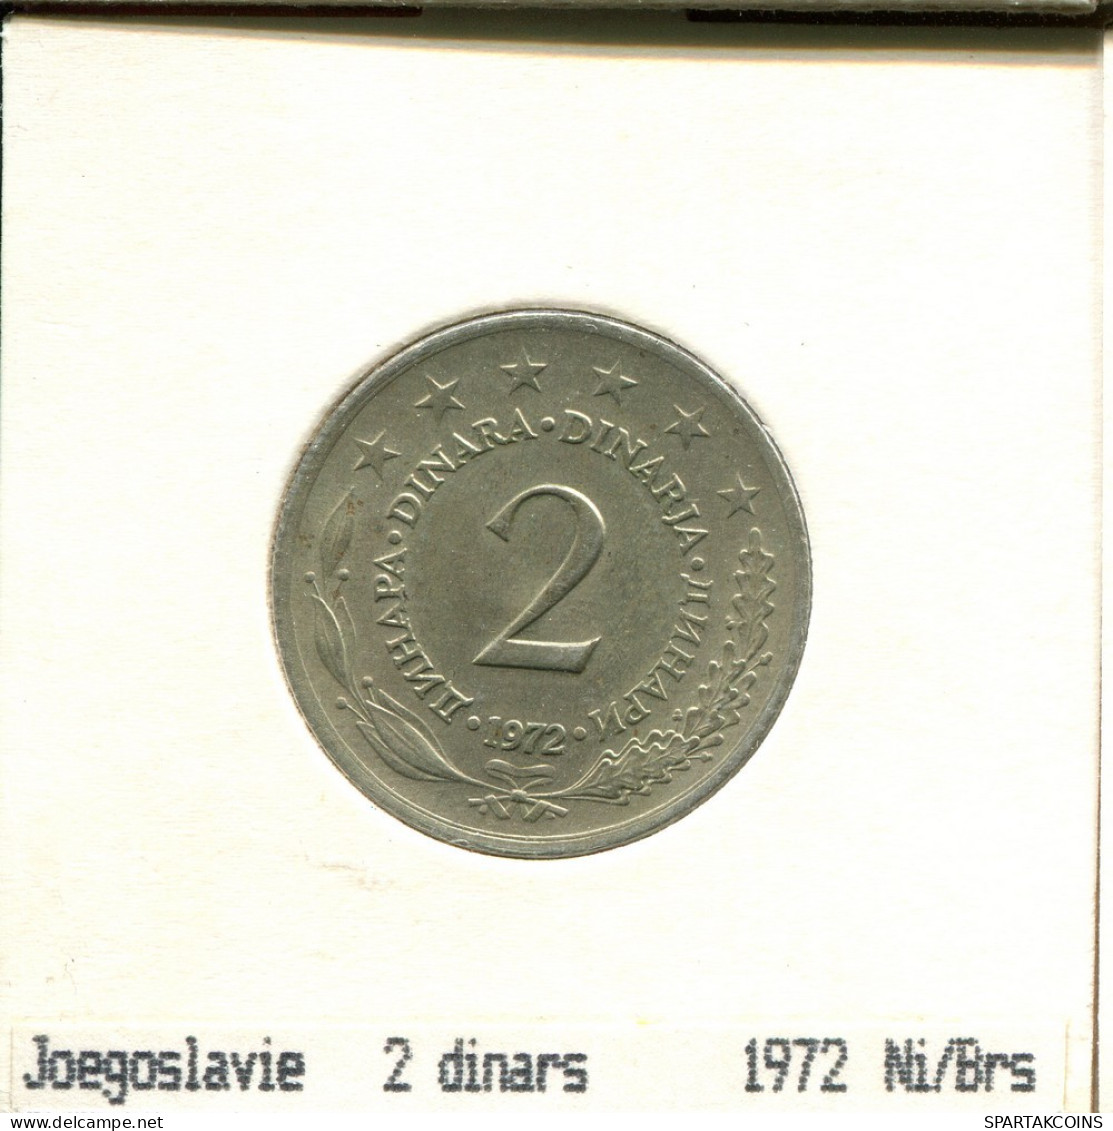 2 DINARA 1972 JUGOSLAWIEN YUGOSLAVIA Münze #AS608.D.A - Jugoslavia